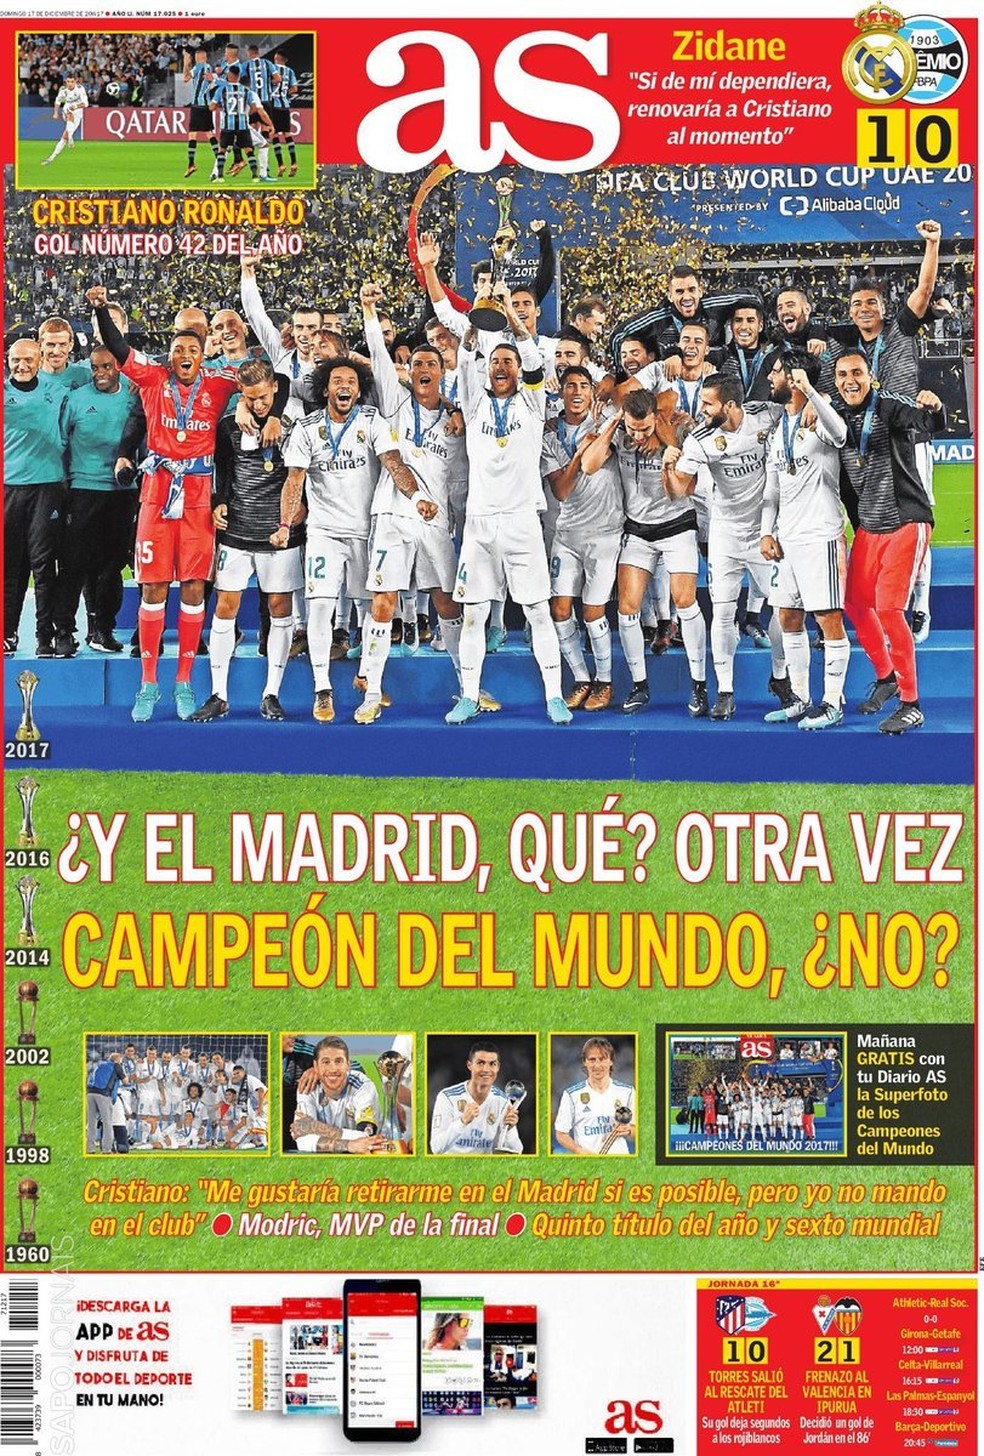 Real Madrid é o primeiro a ostentar título mundial de futebol e basquete